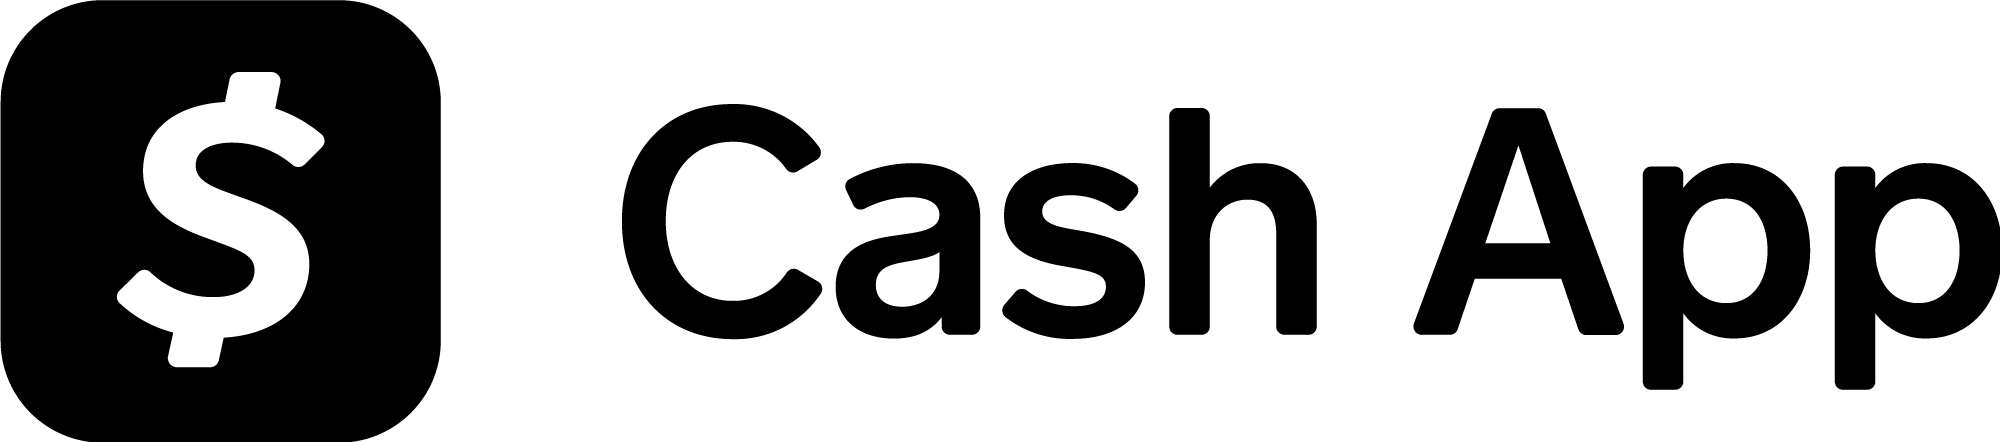 Cash App Logo Black